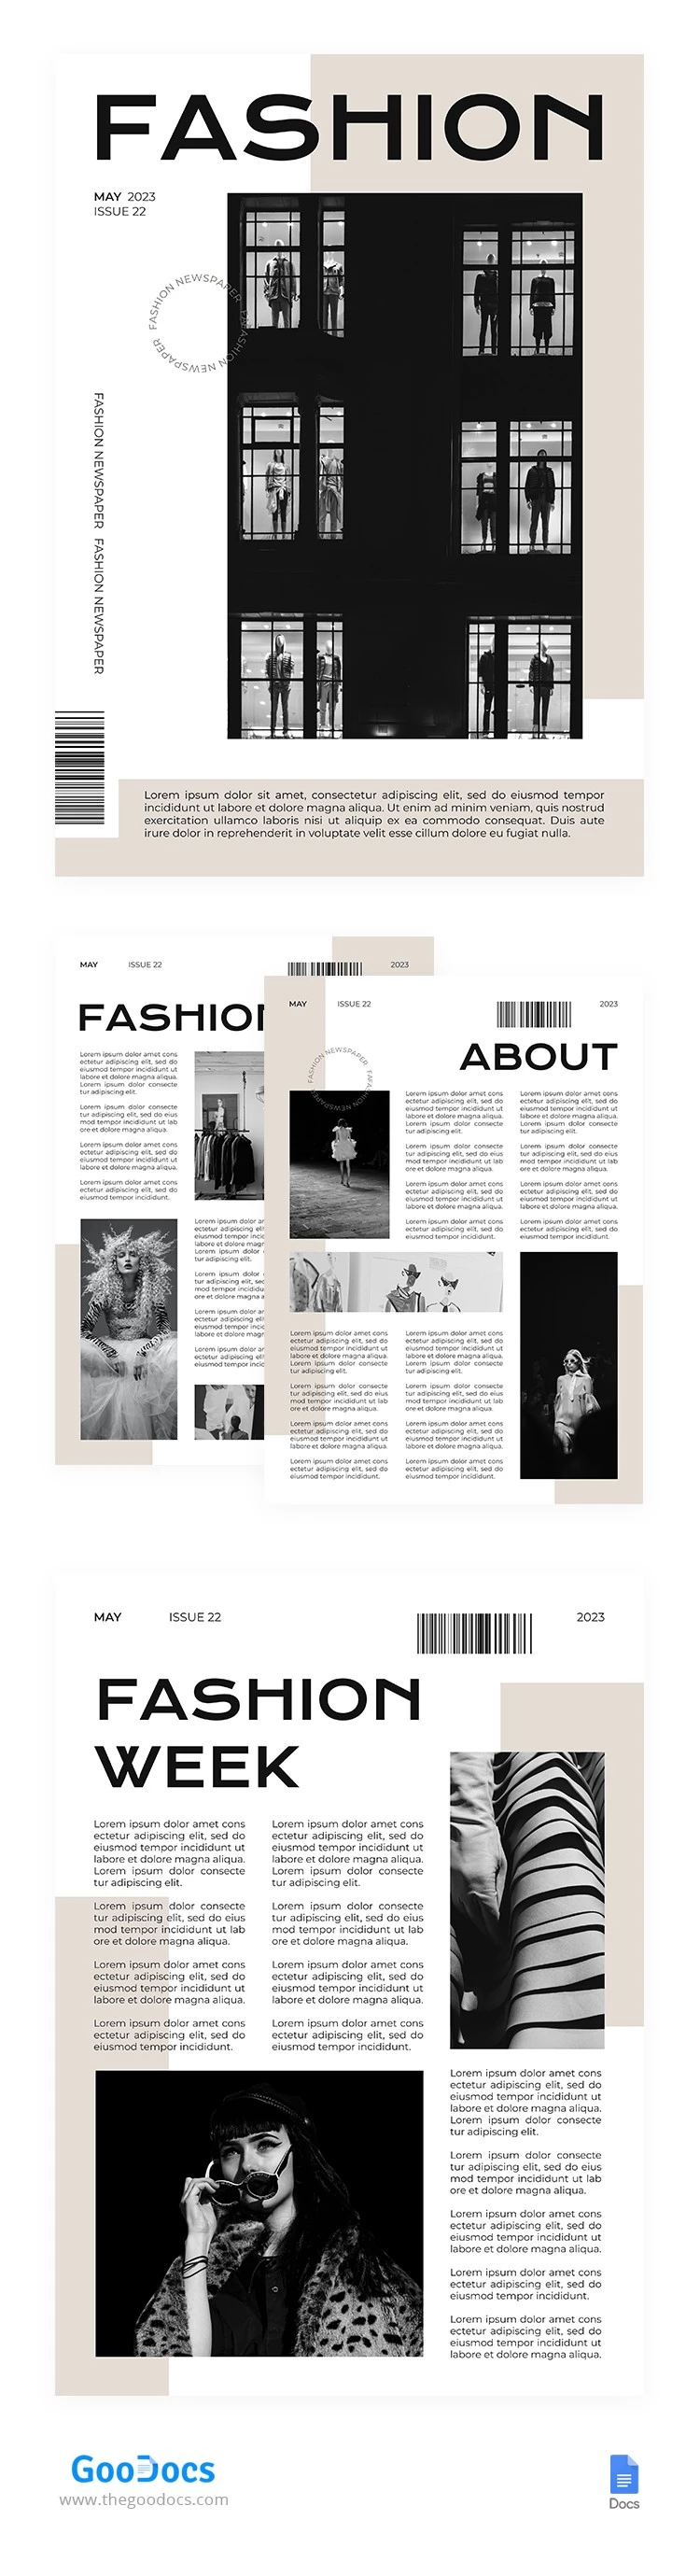 Bright Fashion Newspaper - free Google Docs Template - 10065888